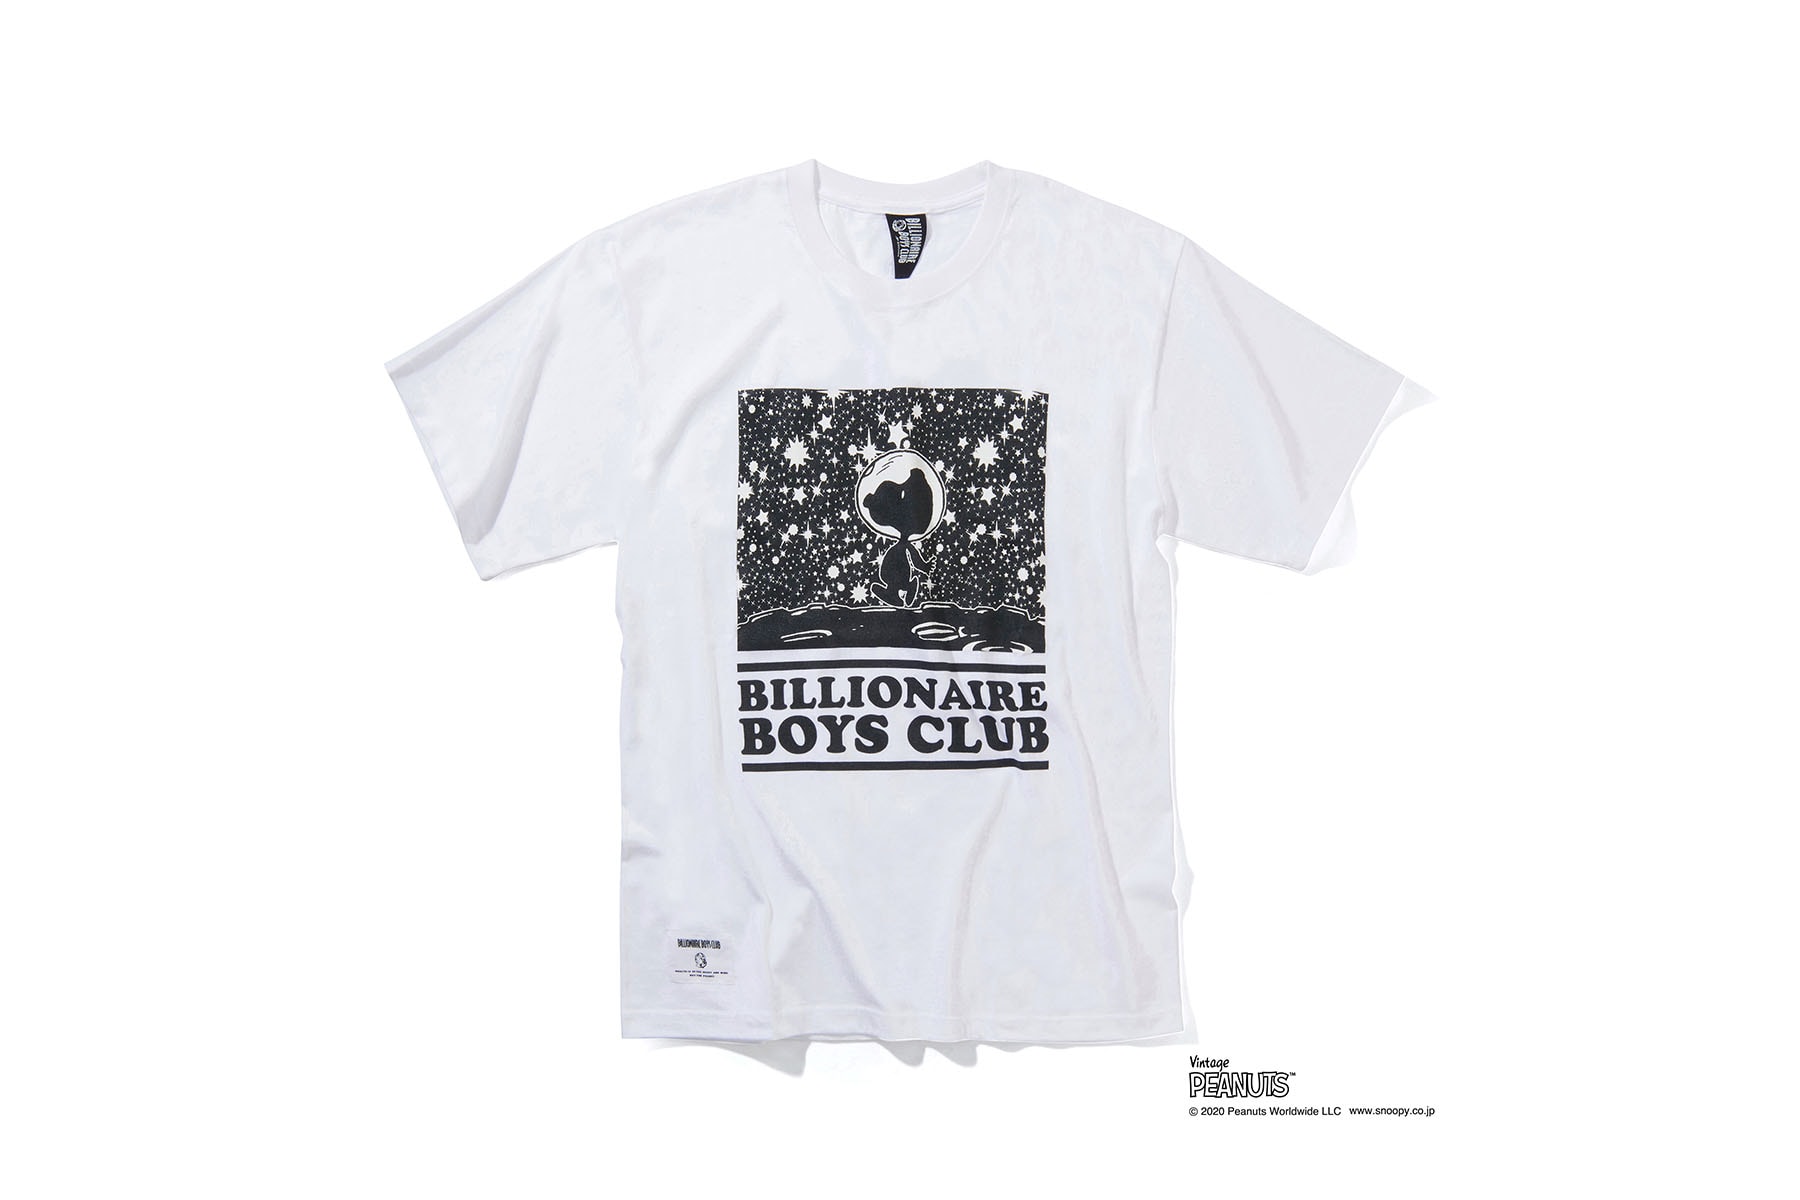 Billionaire Boys Club x PEANUTS のコラボカプセルコレクションが発売される BILLIONAIRE BOYS CLUB x PEANUT releases capsule collection 